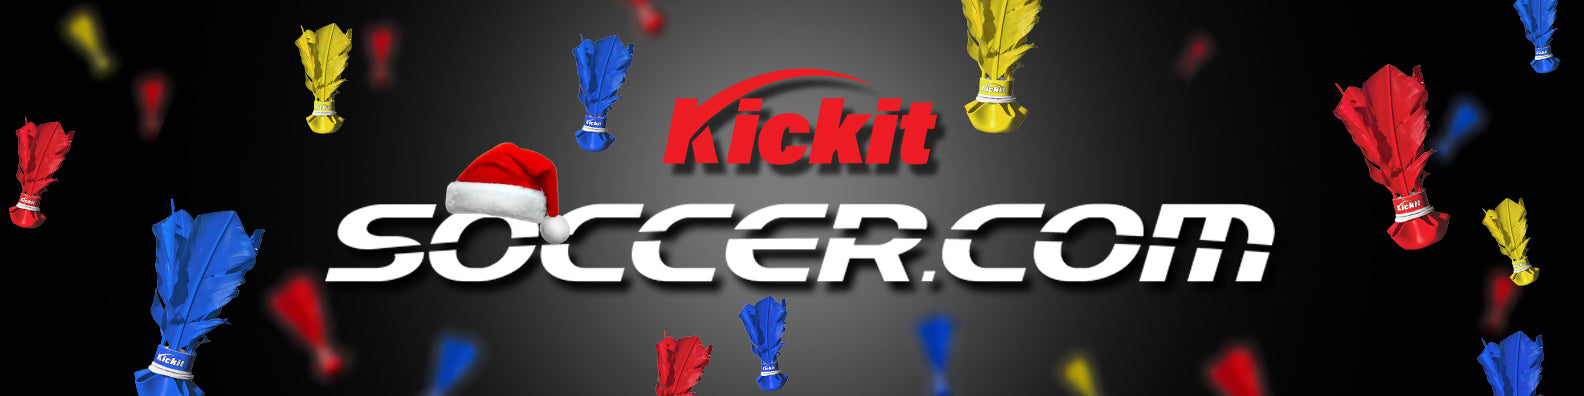 Soccer.com Partnership with Kickit